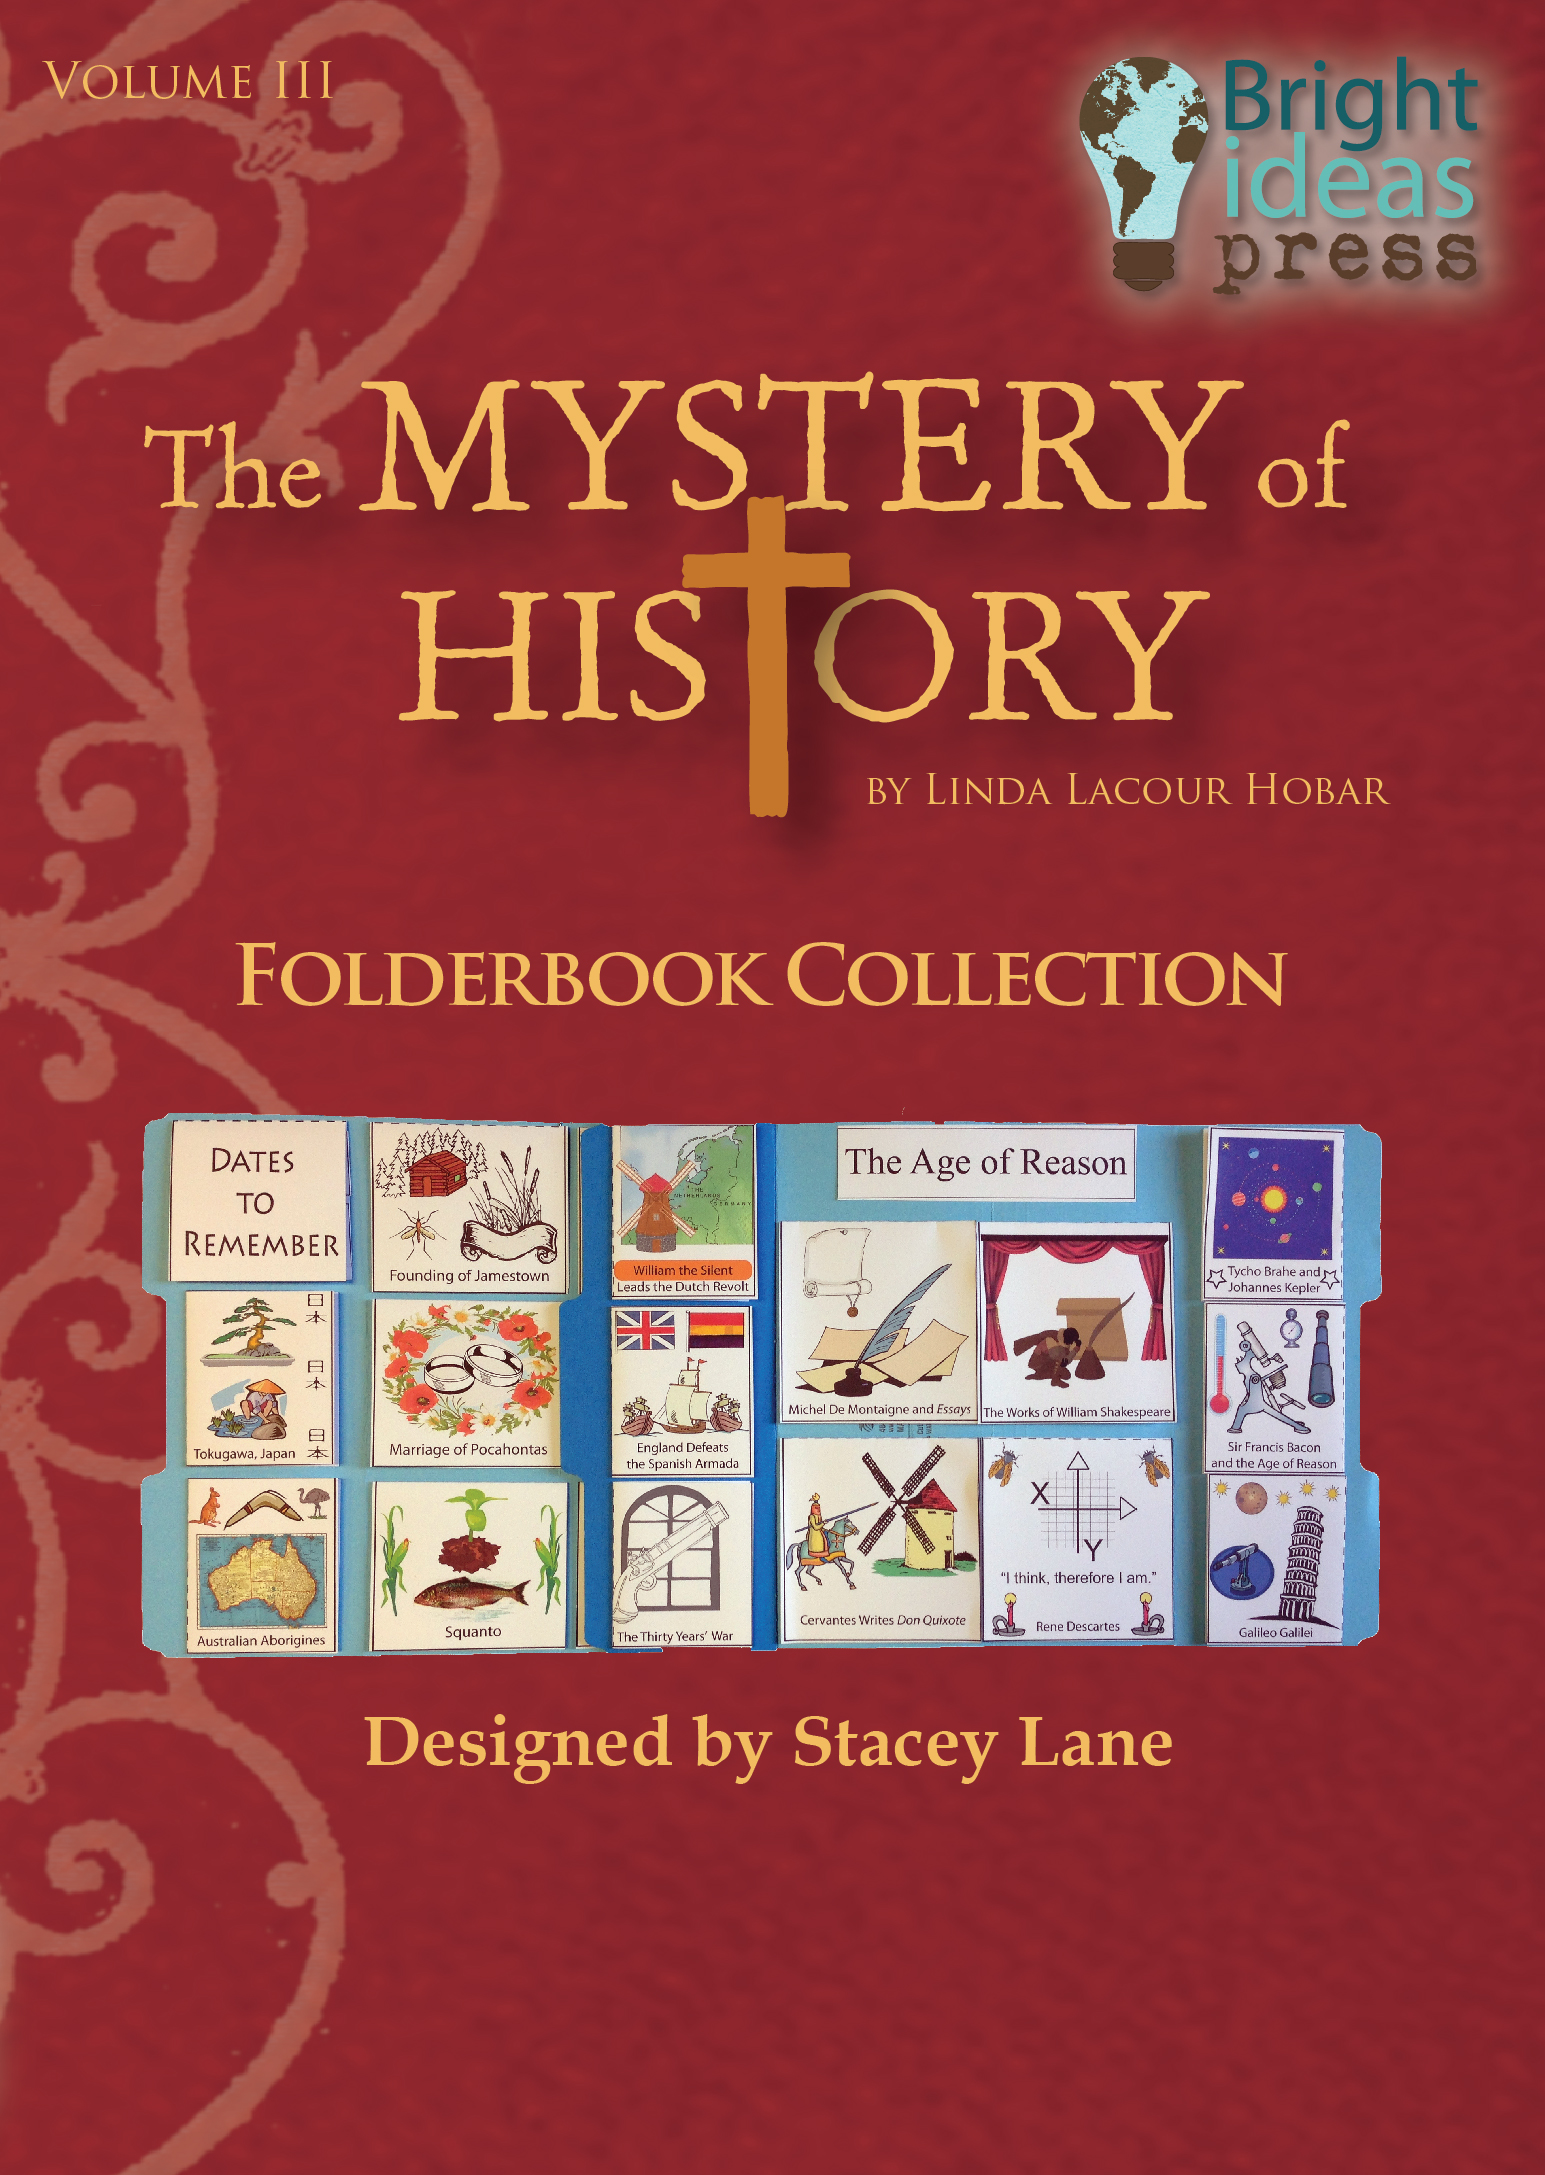 The Mystery of History Volume III Folderbook